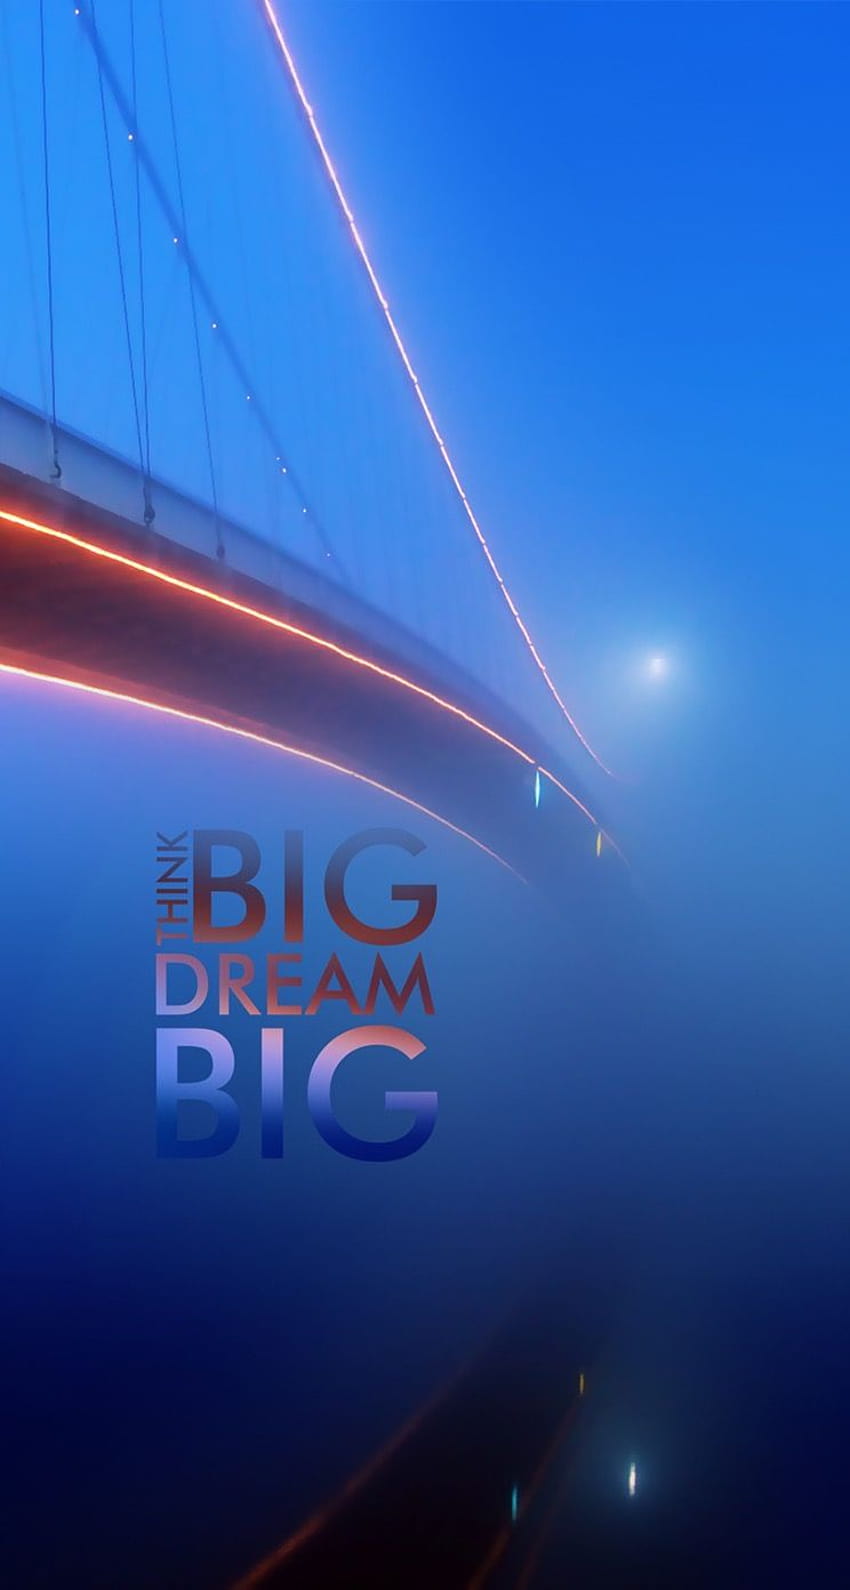 TAP DAN DAPATKAN APLIKASI! Mengutip City Blue Bridge Mist Shining Bright Think Big Dream iPhone 5 wallpaper ponsel HD